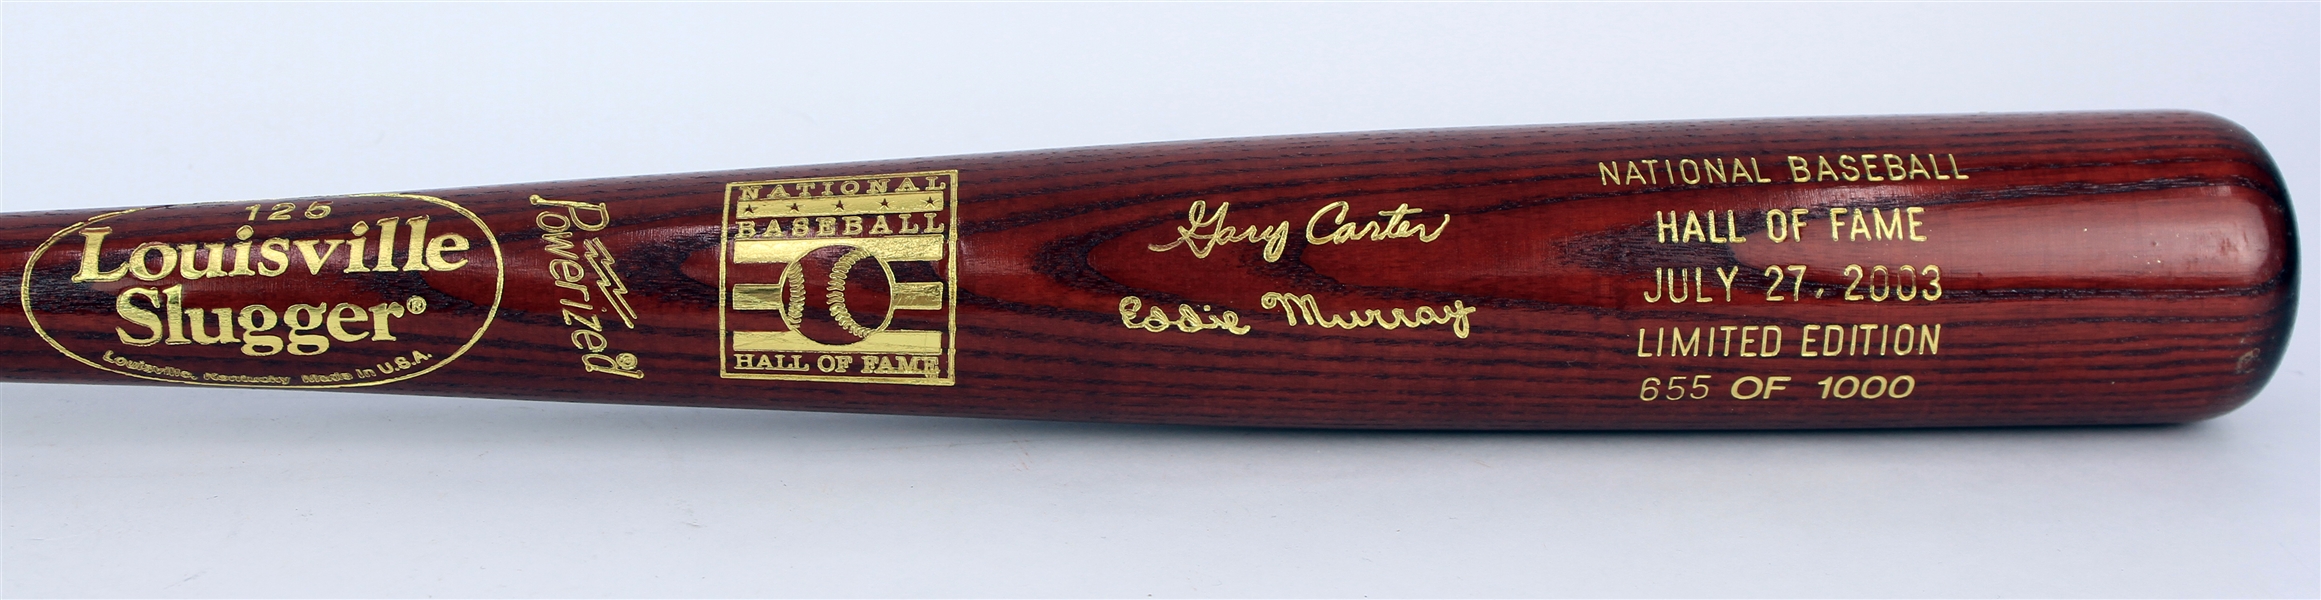 2003 Gary Carter Eddie Murray Louisville Slugger Hall of Fame Commemorative Bat (655/1000)